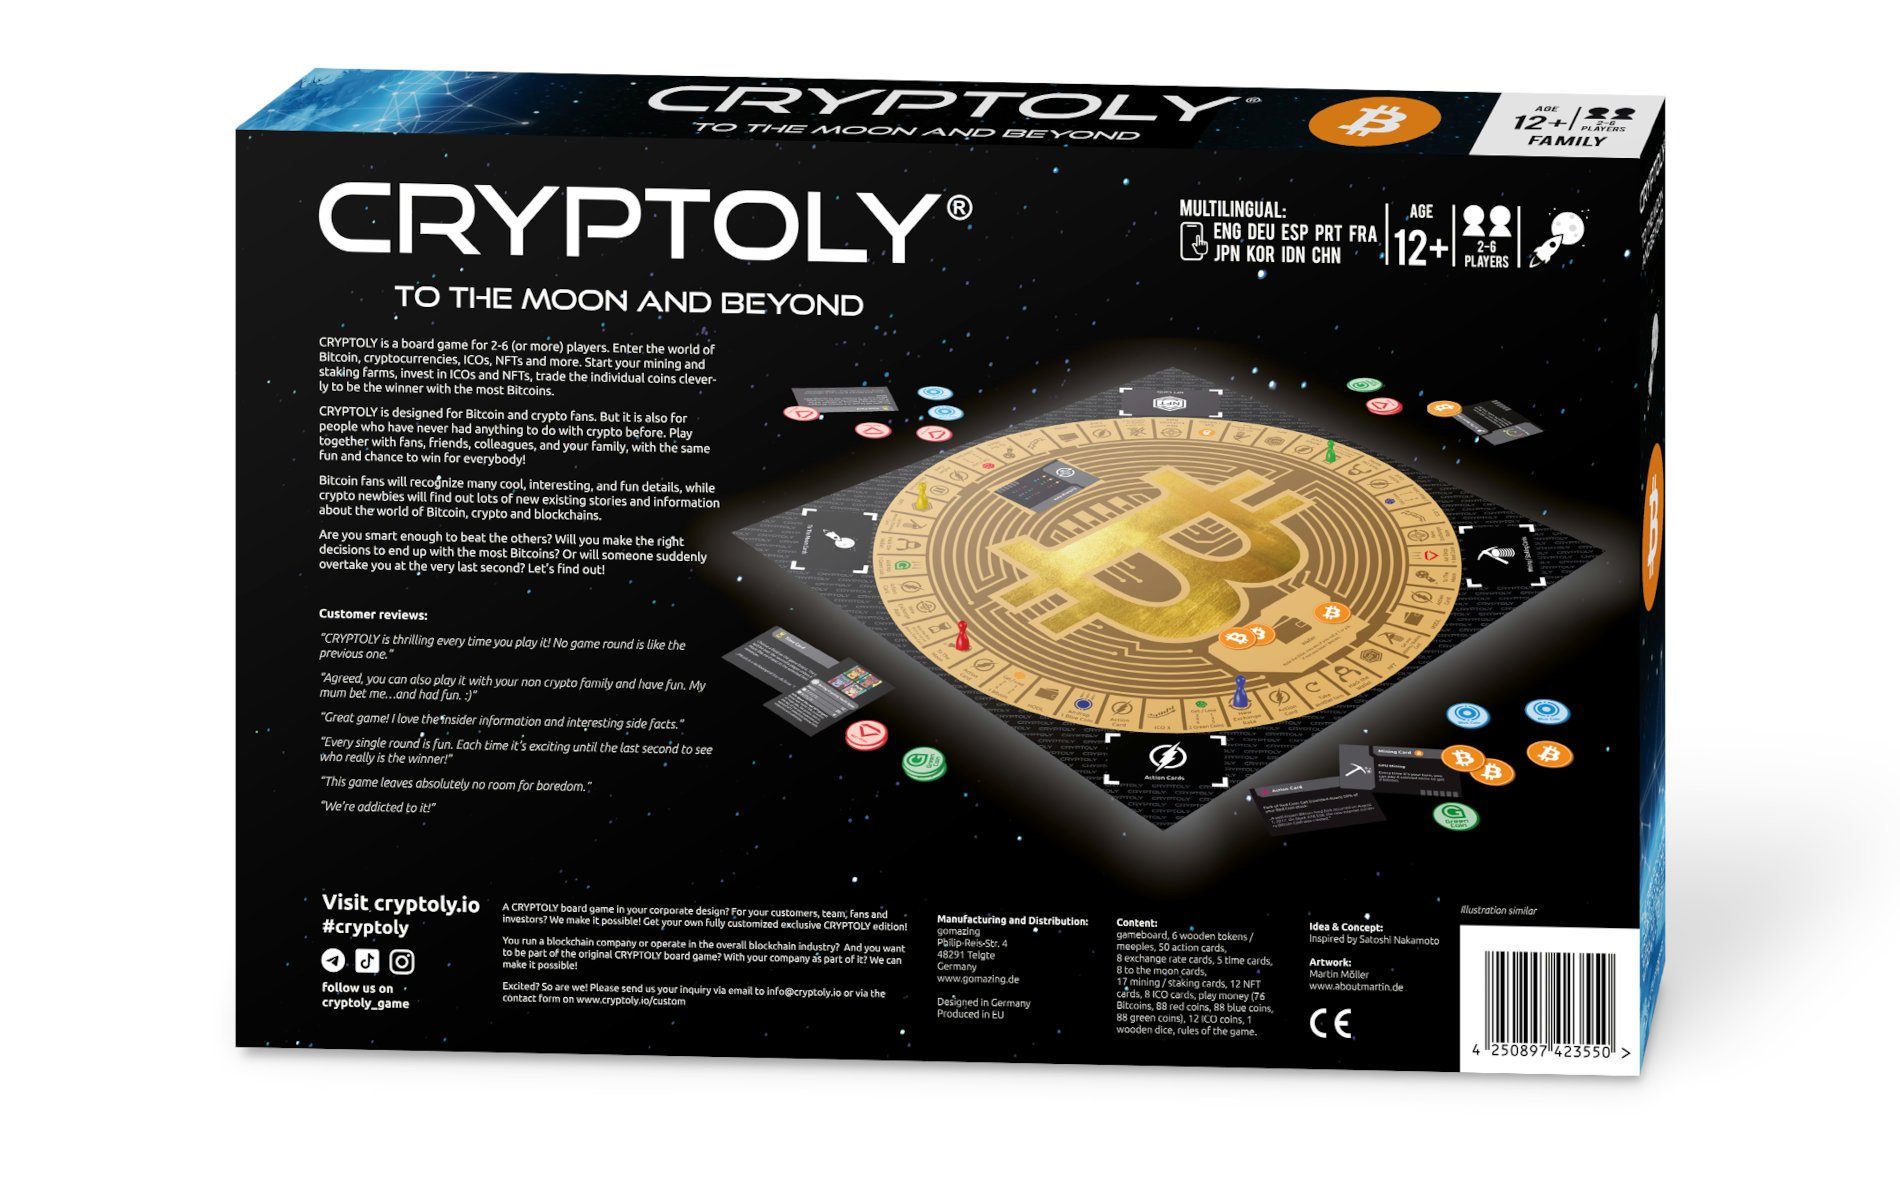 And The CRYPTOLY Beyond To Moon Gomazing Bitcoin Brettspiel Das Spiel, mehrsprachige